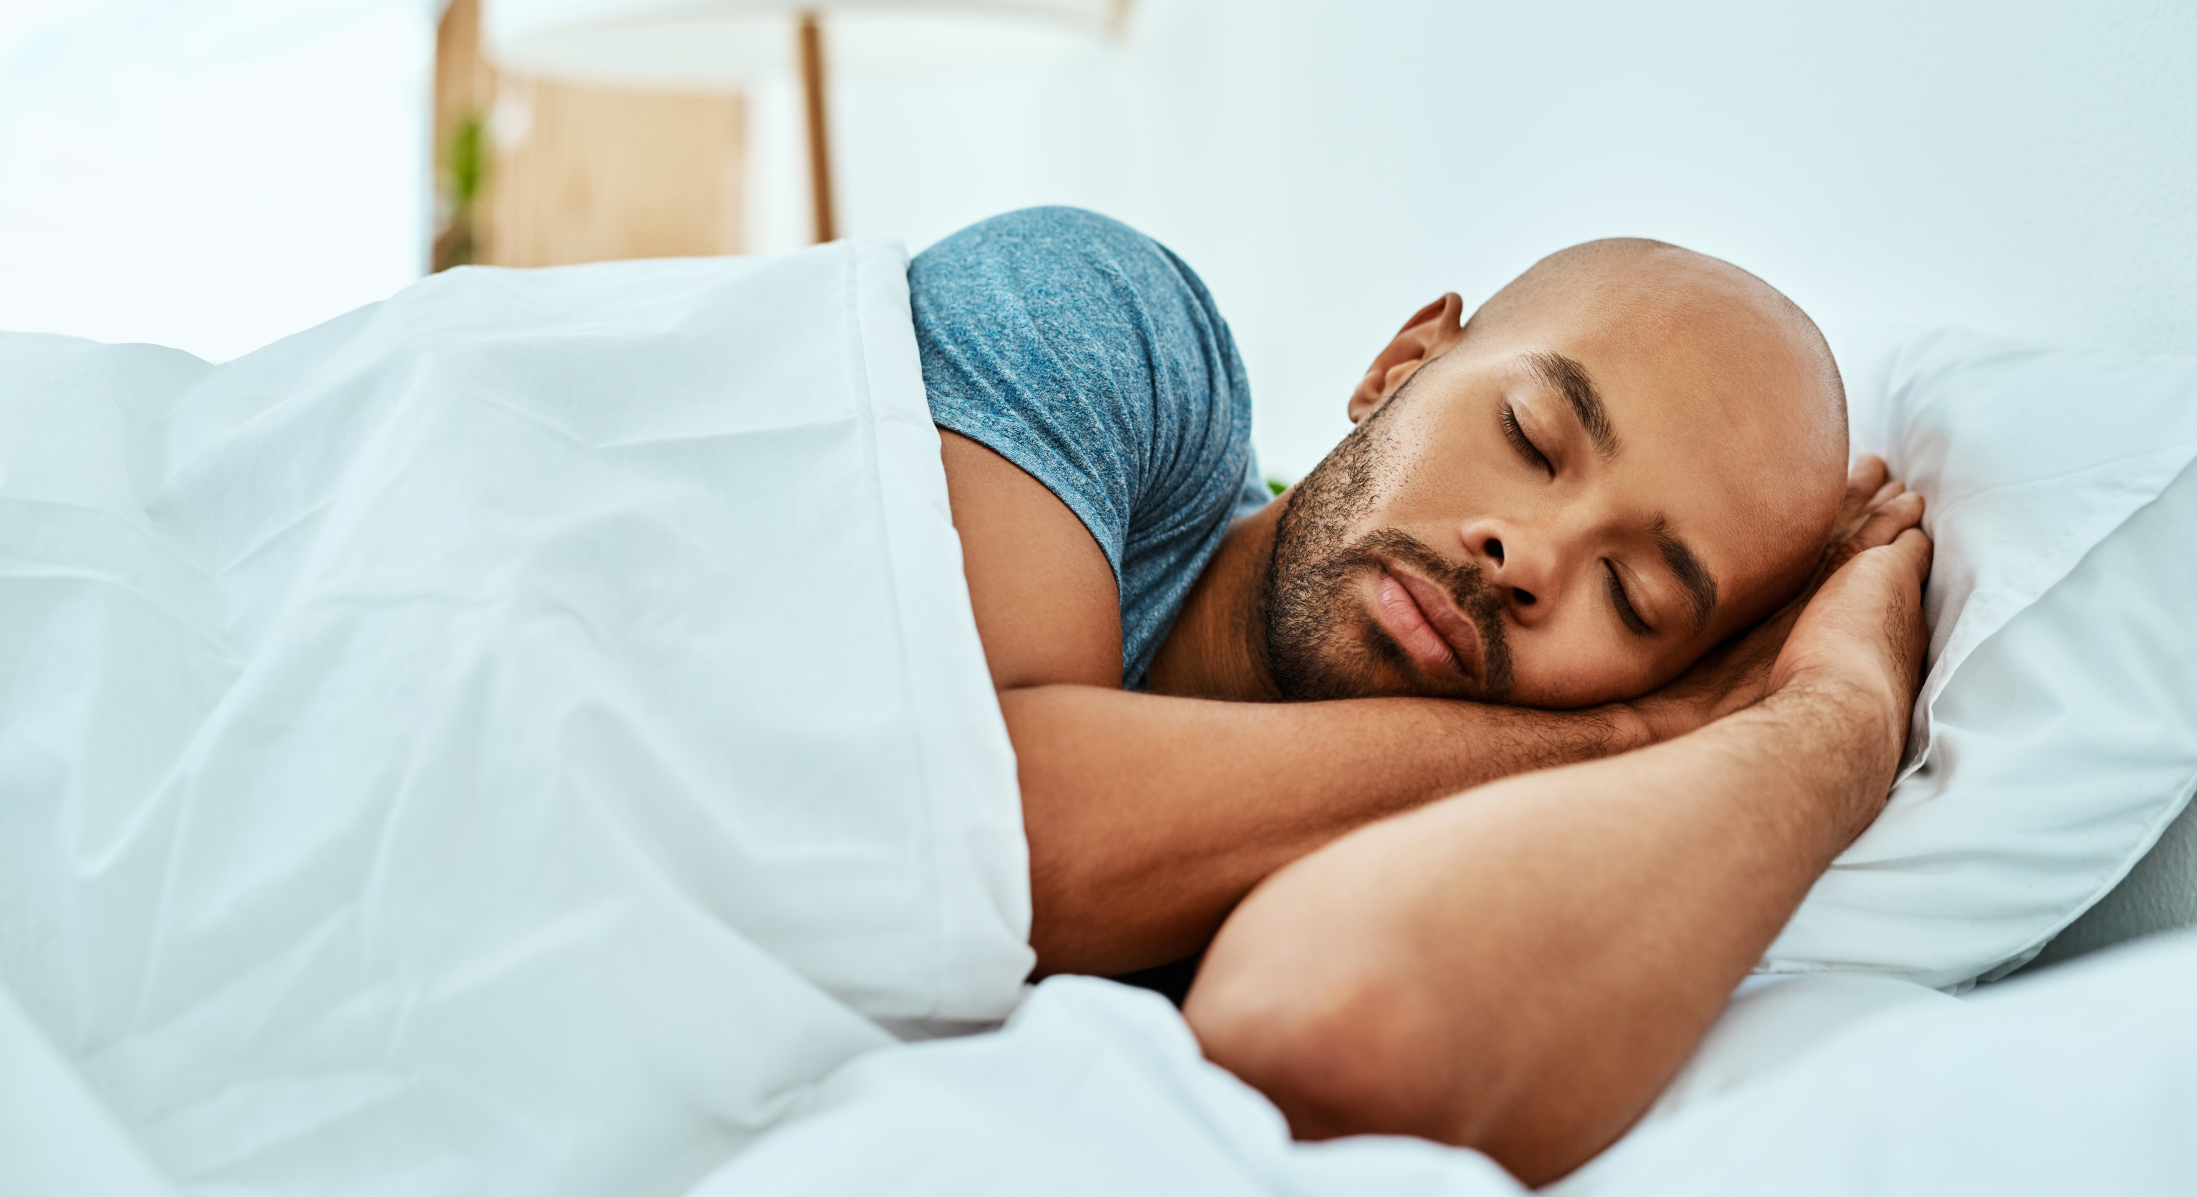 Podemos dormir mejor gracias a estas técnicas de relajación